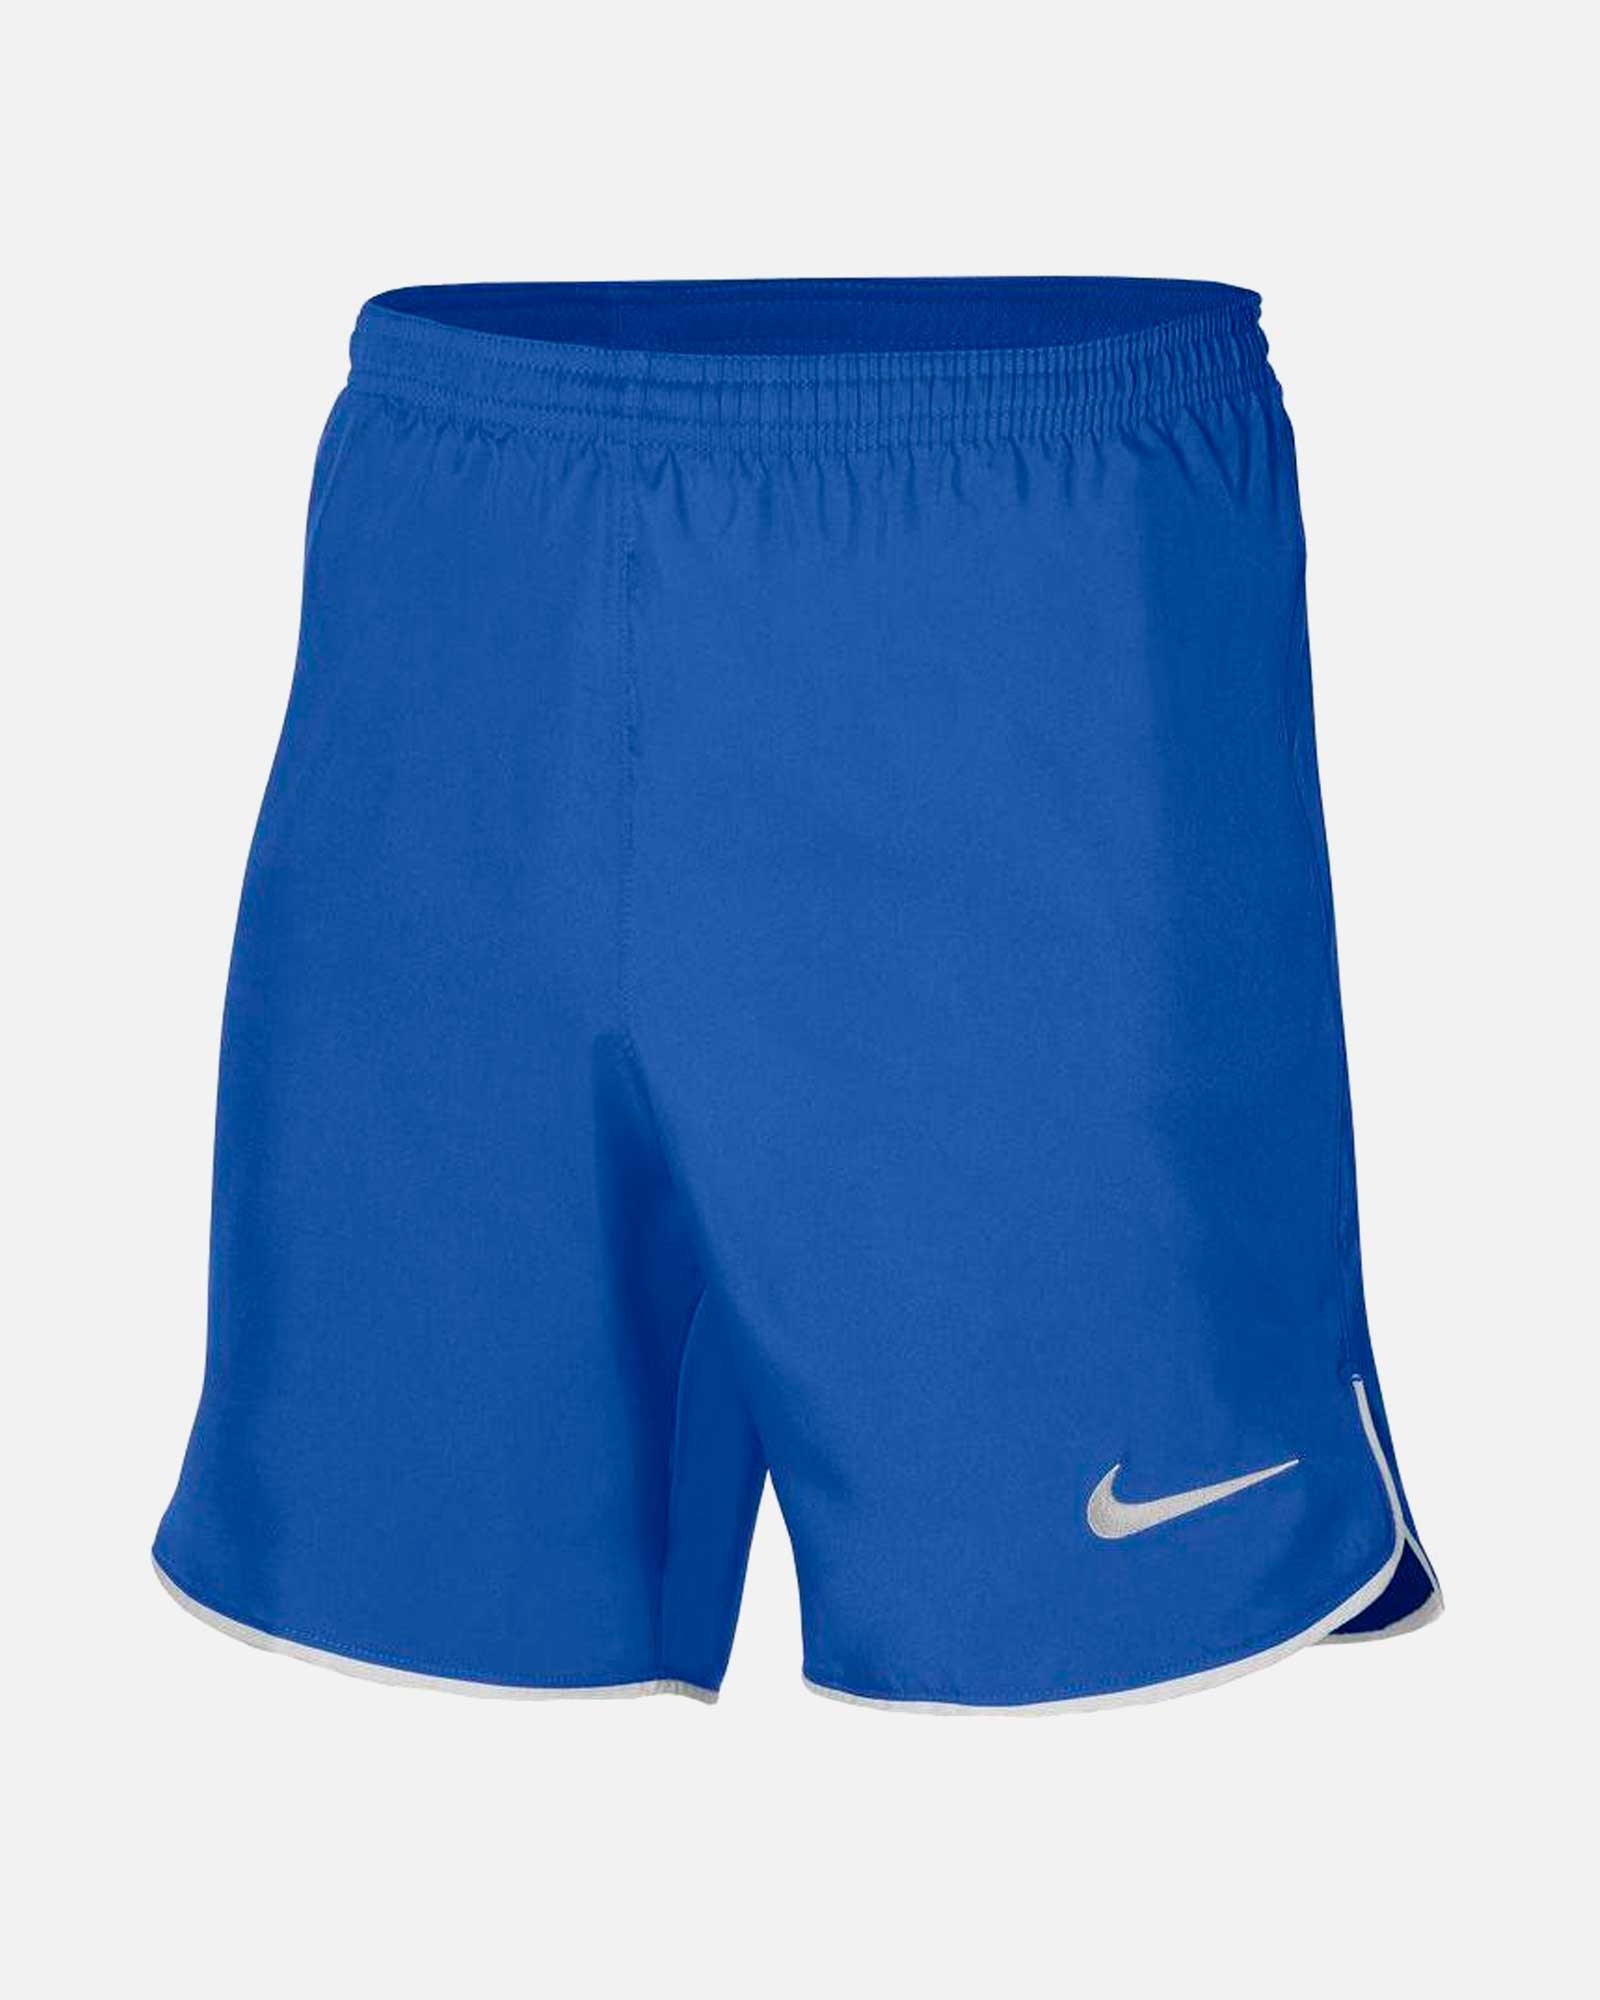 Pantalón Nike Laser V - Fútbol Factory